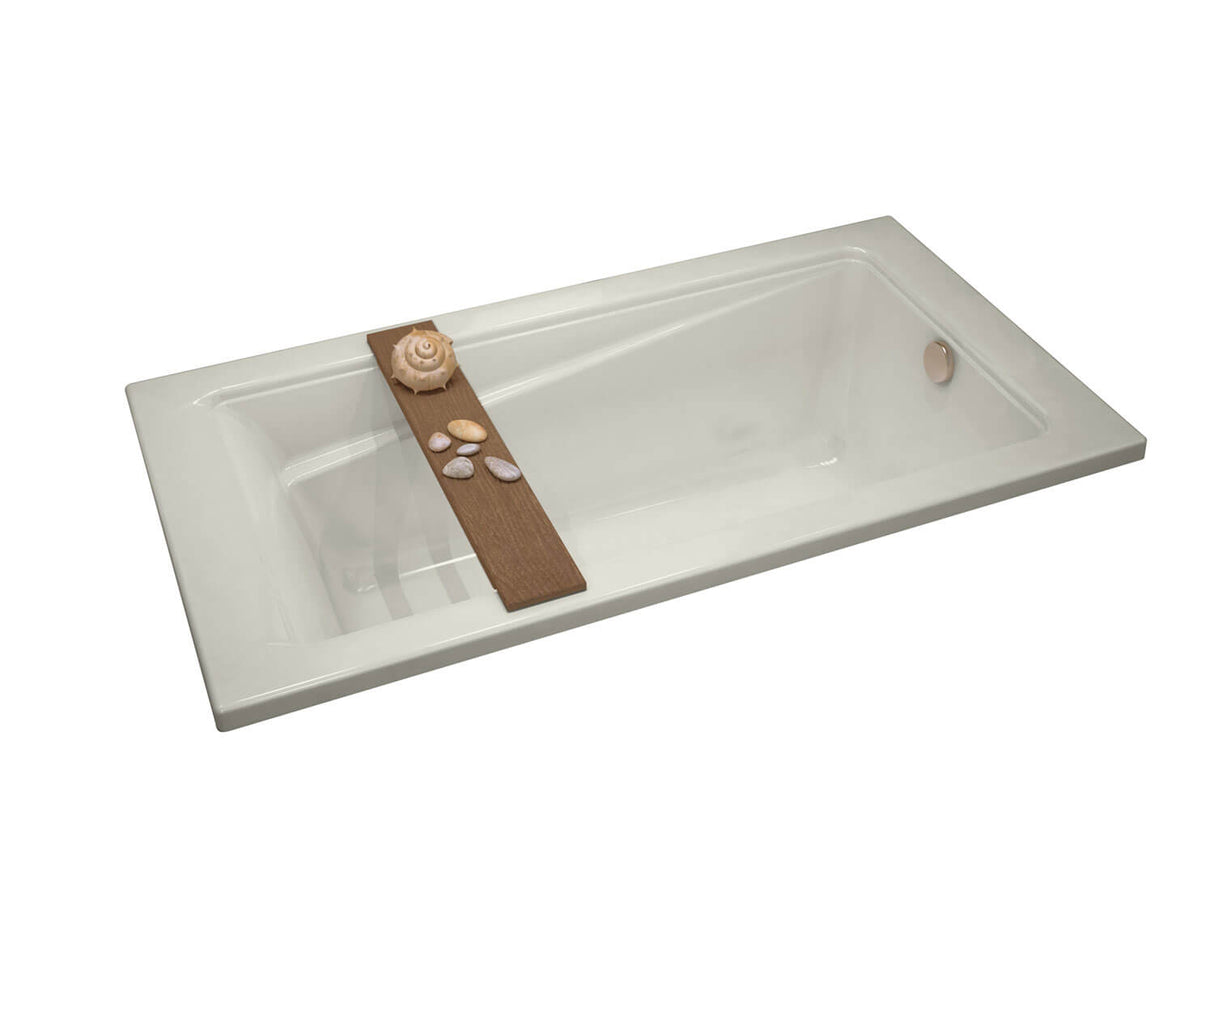 MAAX 106185-003-007-000 Exhibit 7242 Acrylic Drop-in End Drain Whirlpool Bathtub in Biscuit